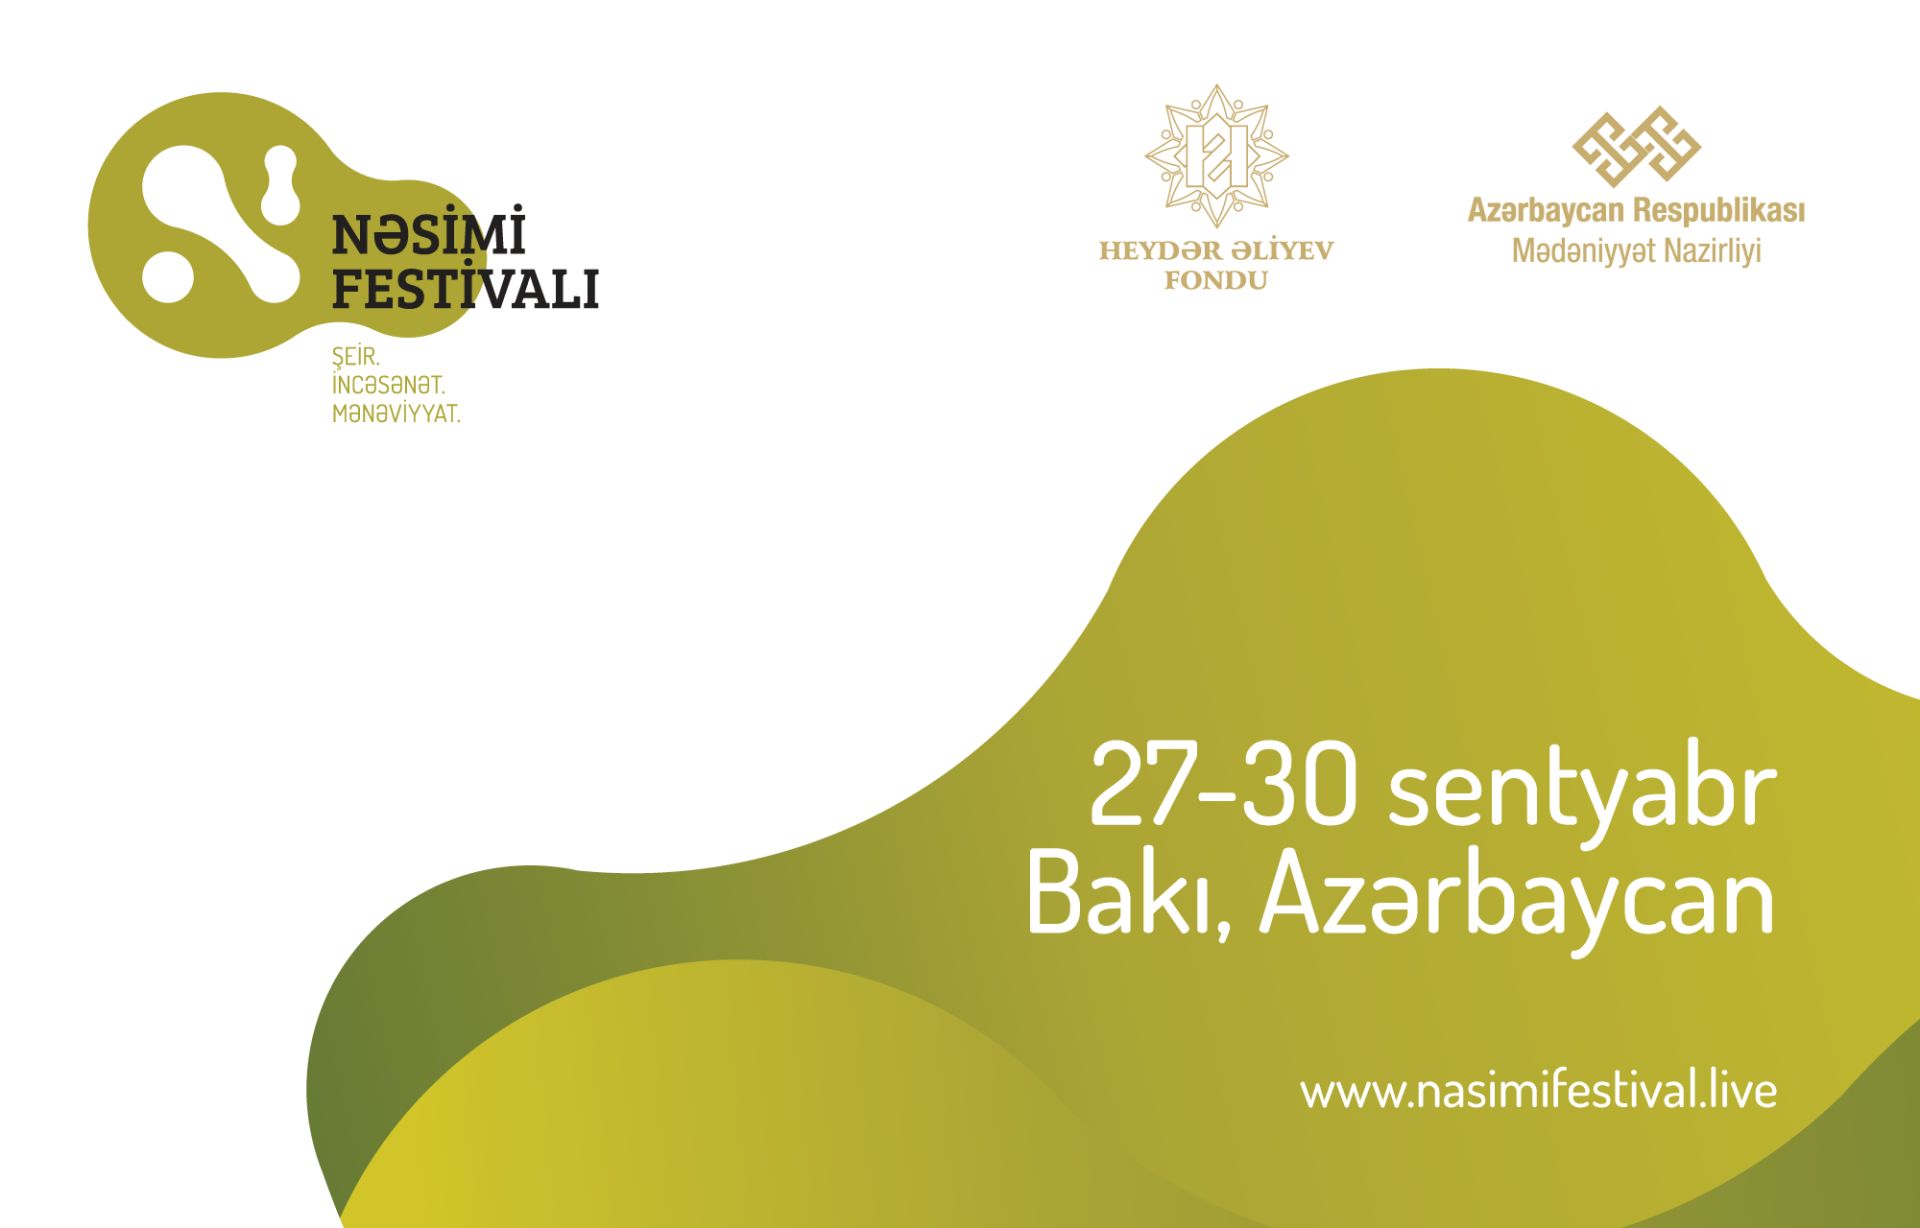 Nasimi Festival of Poetry, Arts, and Spirituality set to start in Azerbaijan